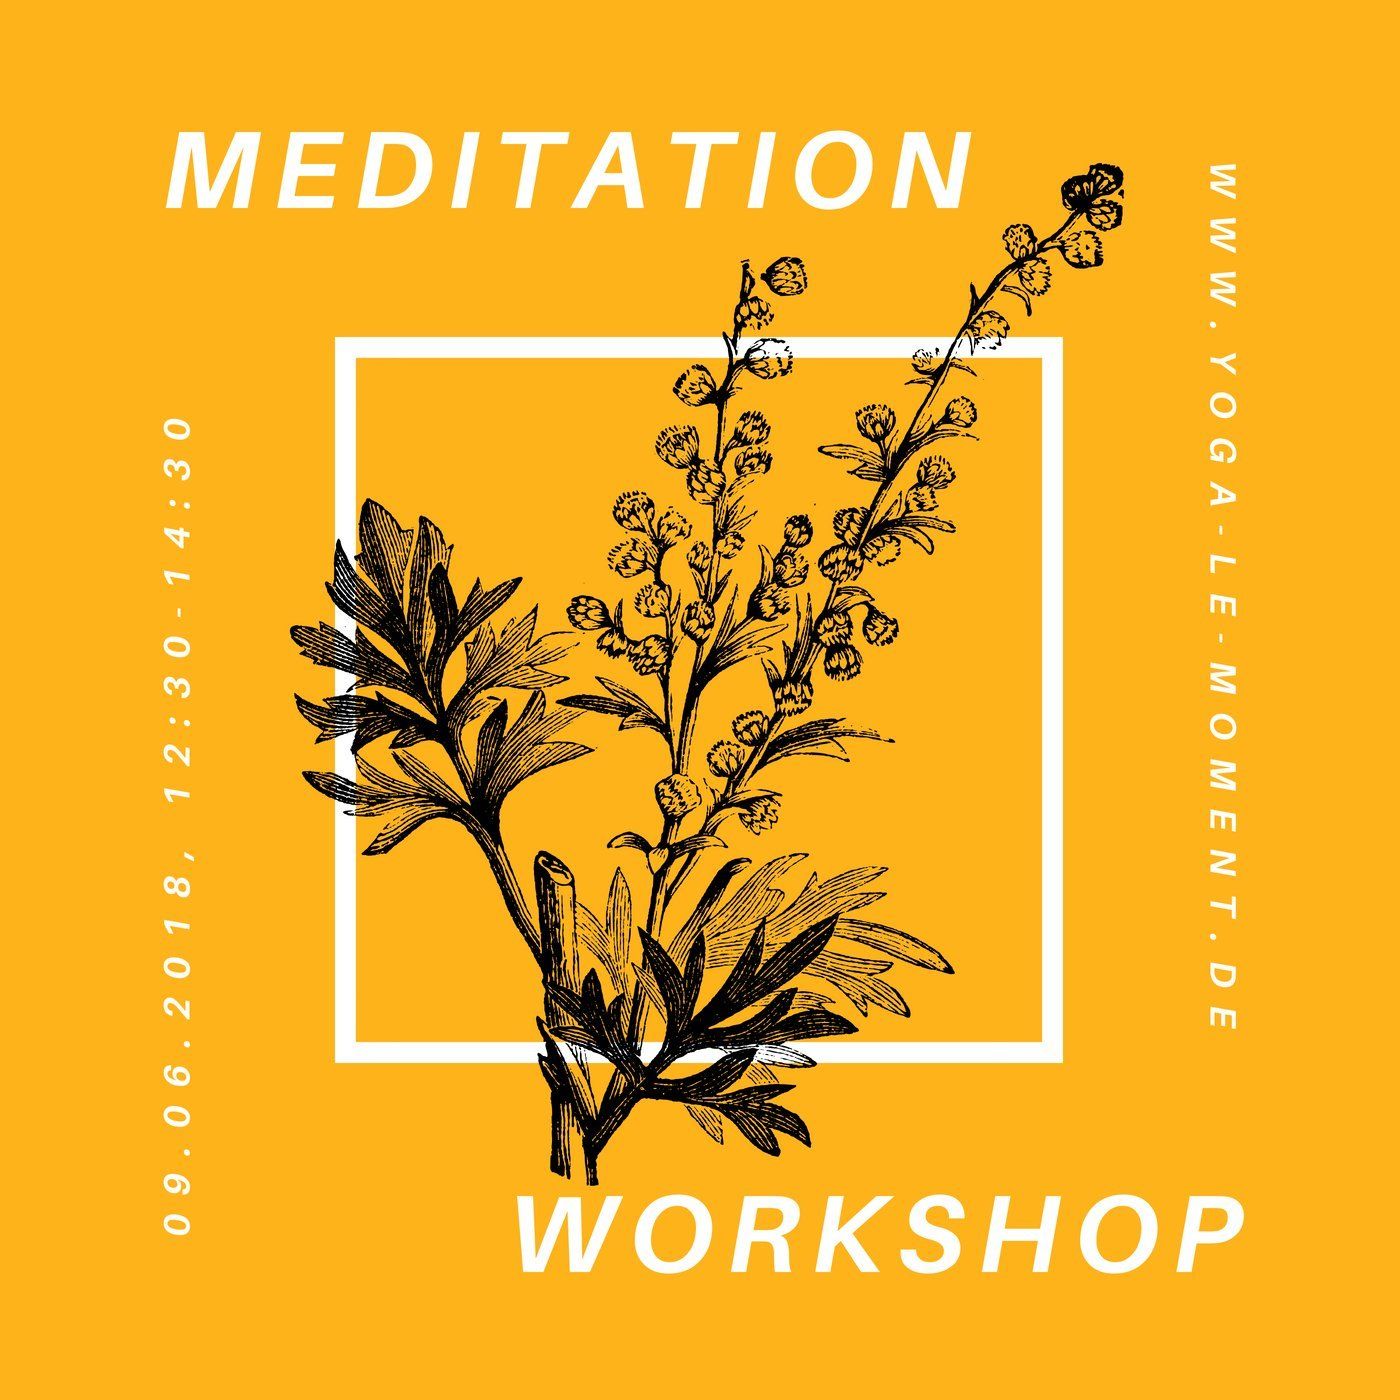 Workshop Meditation am 09.06.2018 bei le Moment Yoga und Meditation in Köln Nippes